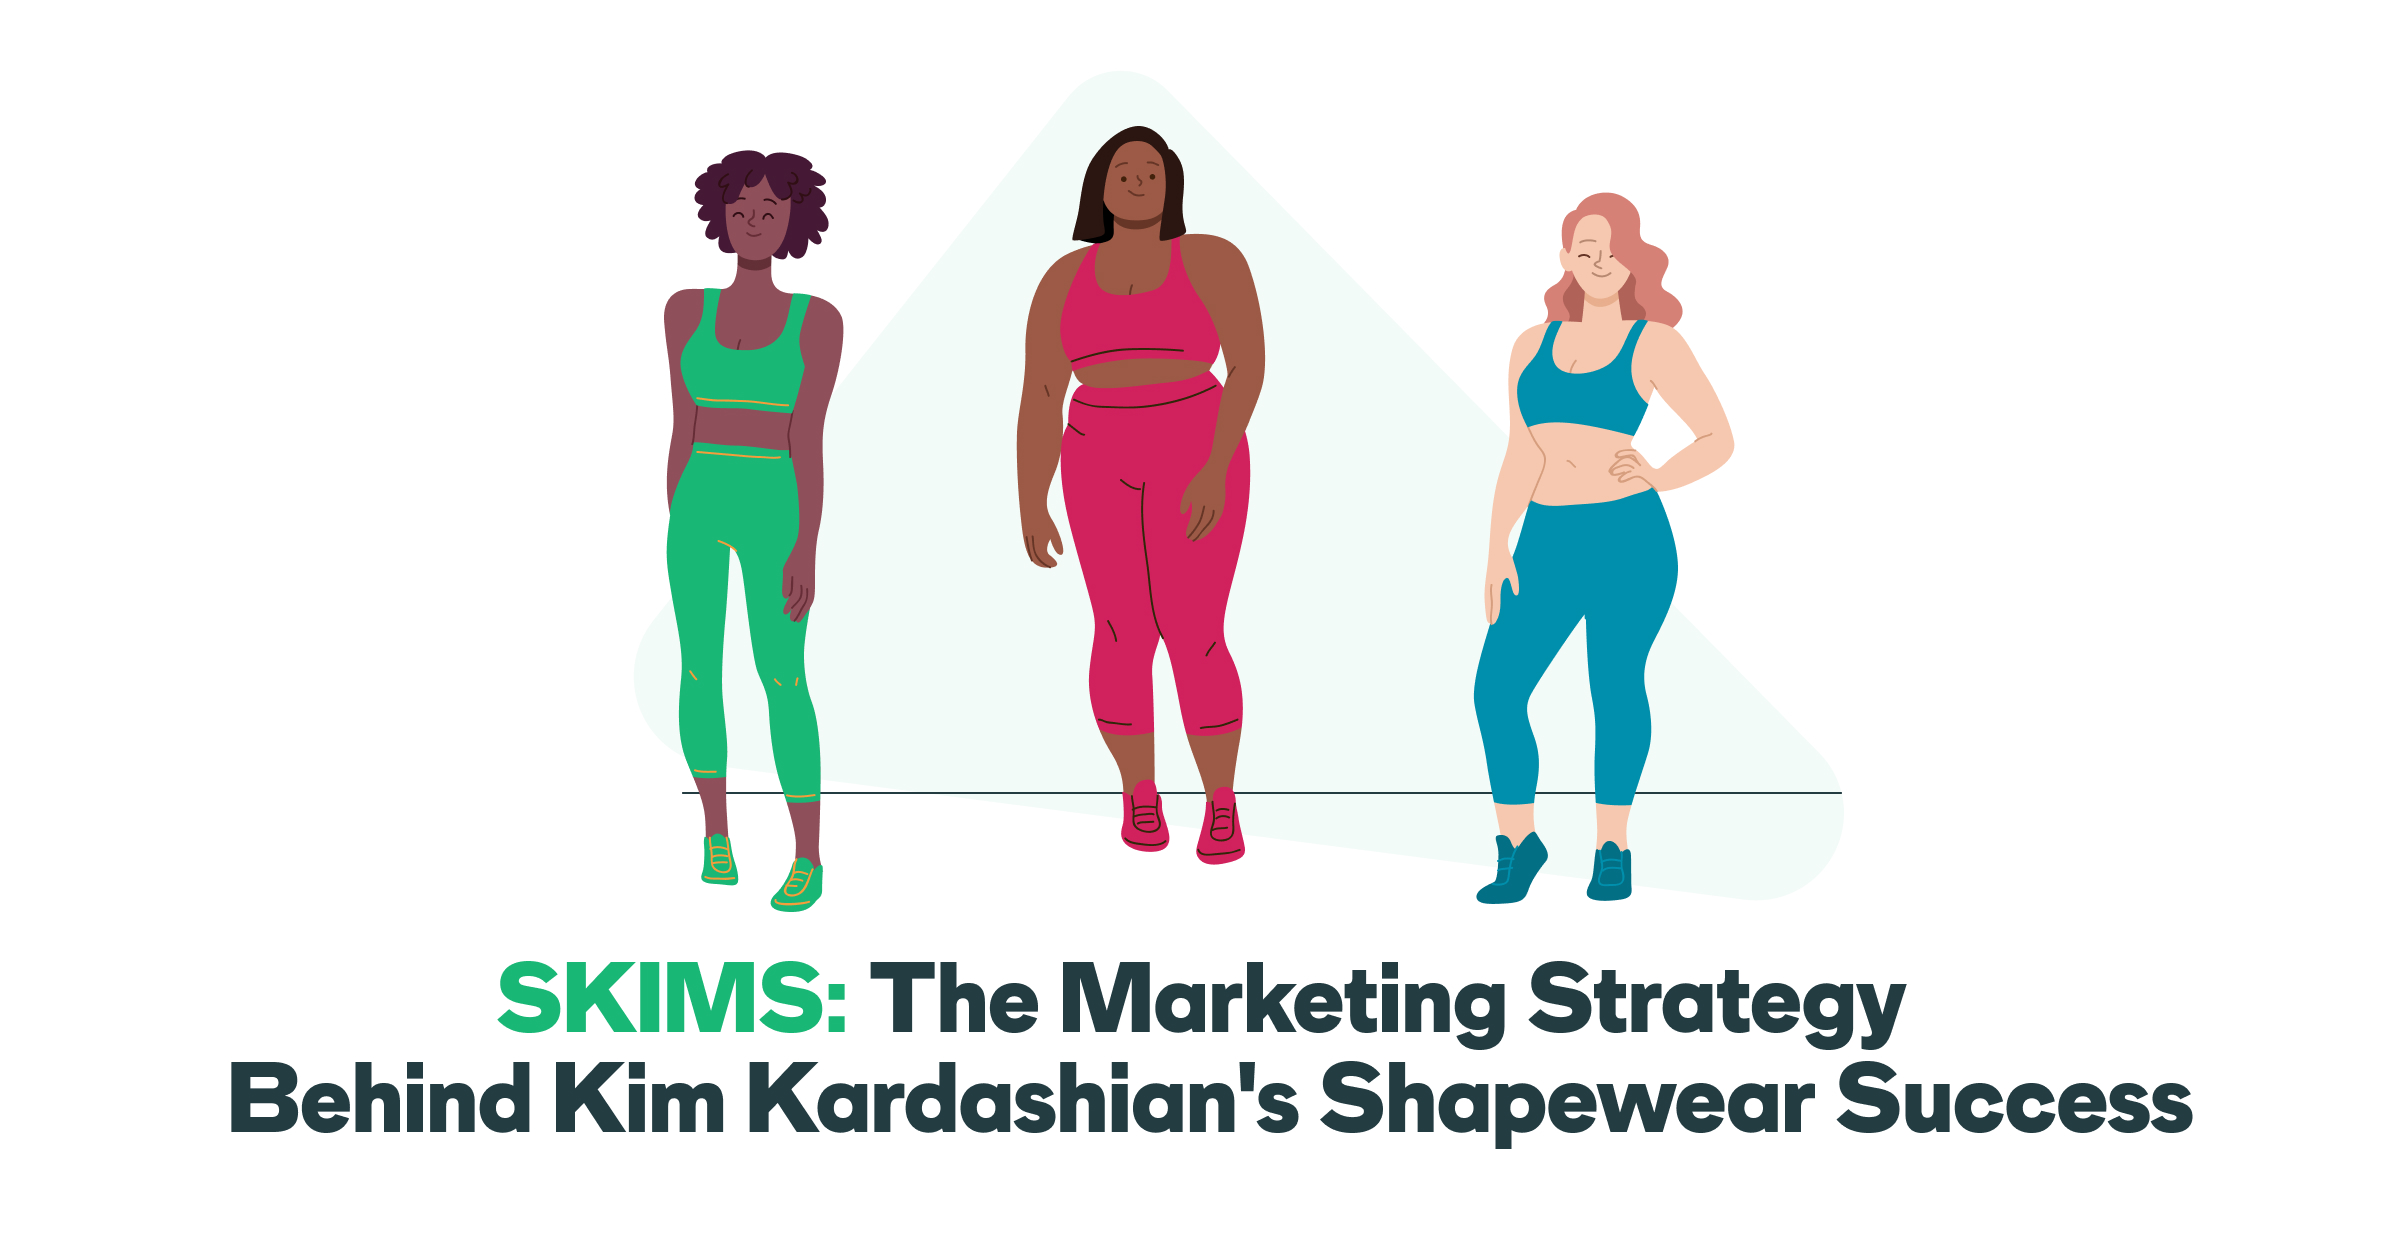 SKIMS: The Marketing Strategy Behind Kim Kardashian's Shapewear